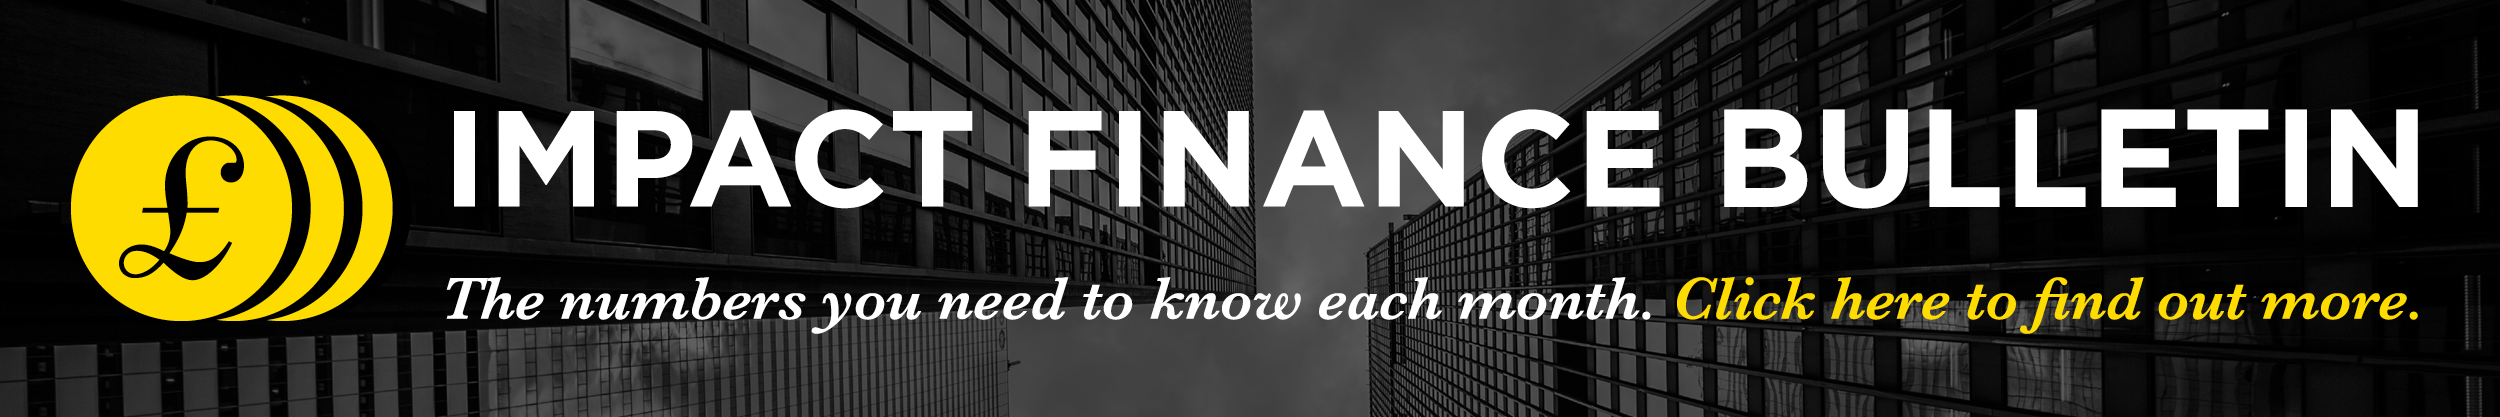 Impact Finance Bulletin